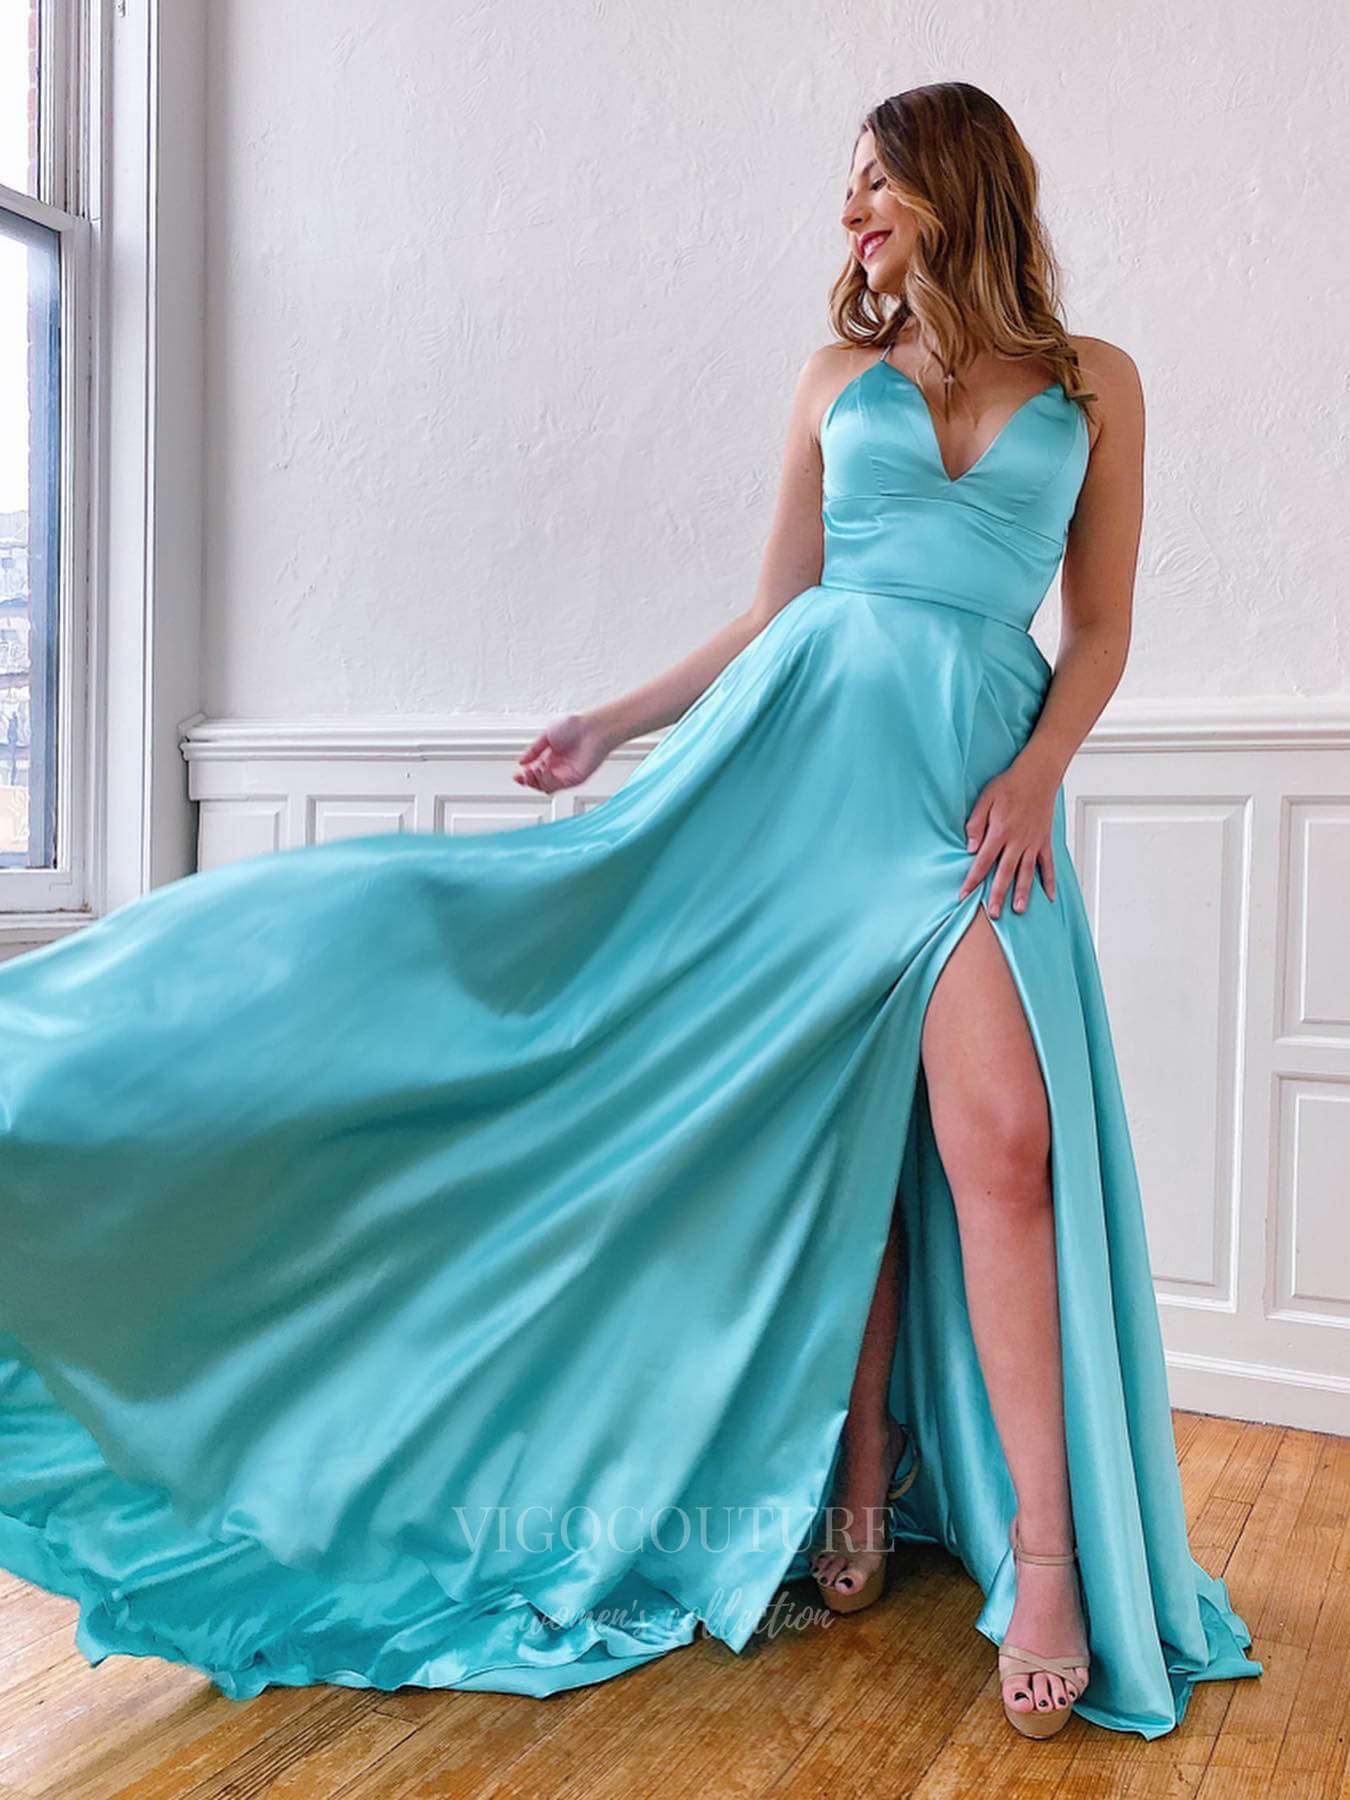 vigocouture-Satin A-Line Spaghetti Strap Prom Dress 20816-Prom Dresses-vigocouture-Turquoise-US2-